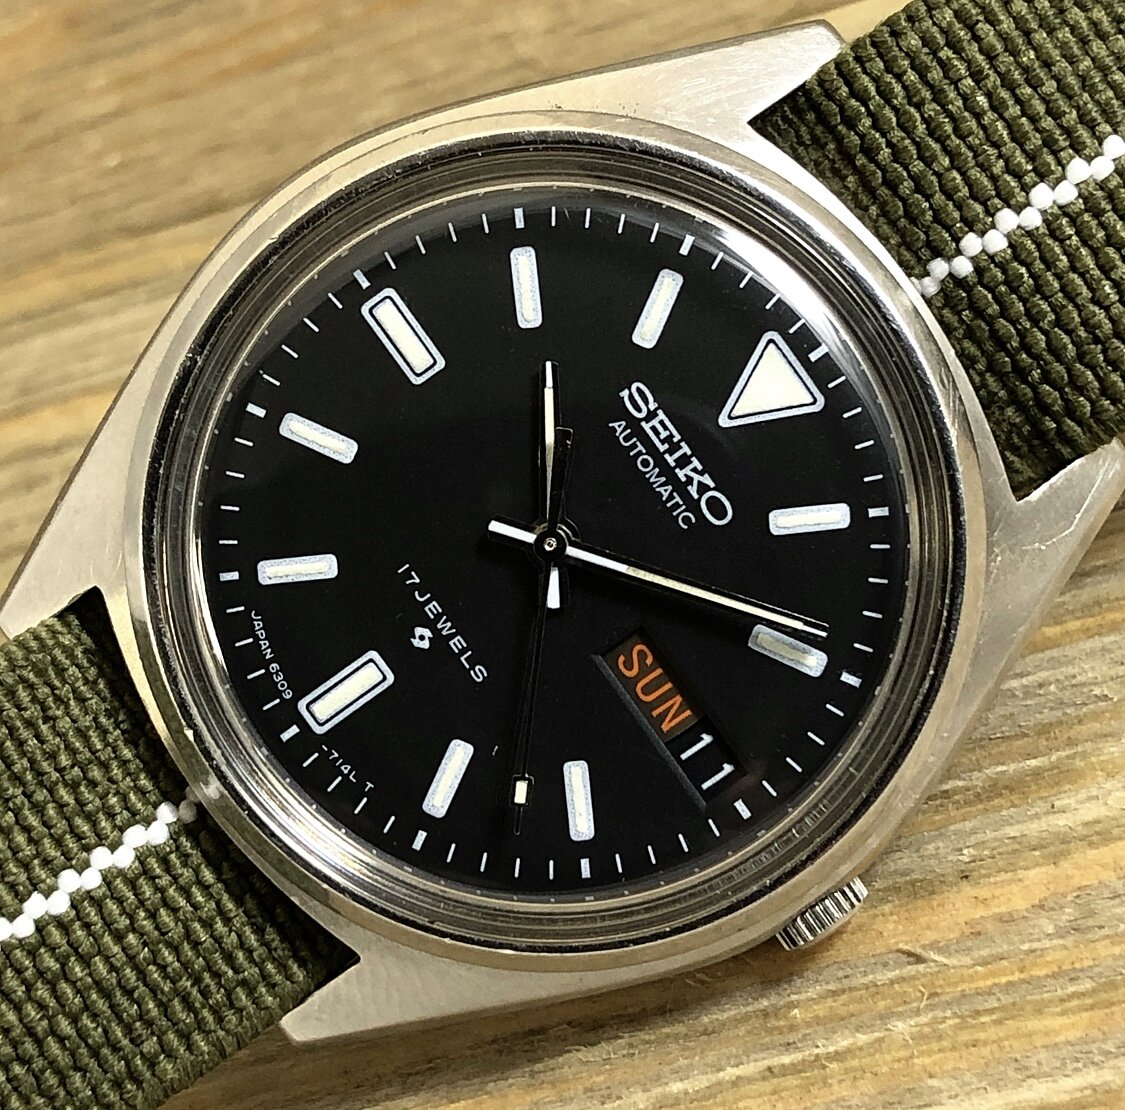 1980 Seiko 6309-7149 Automatic Day/Date “5” Field Watch